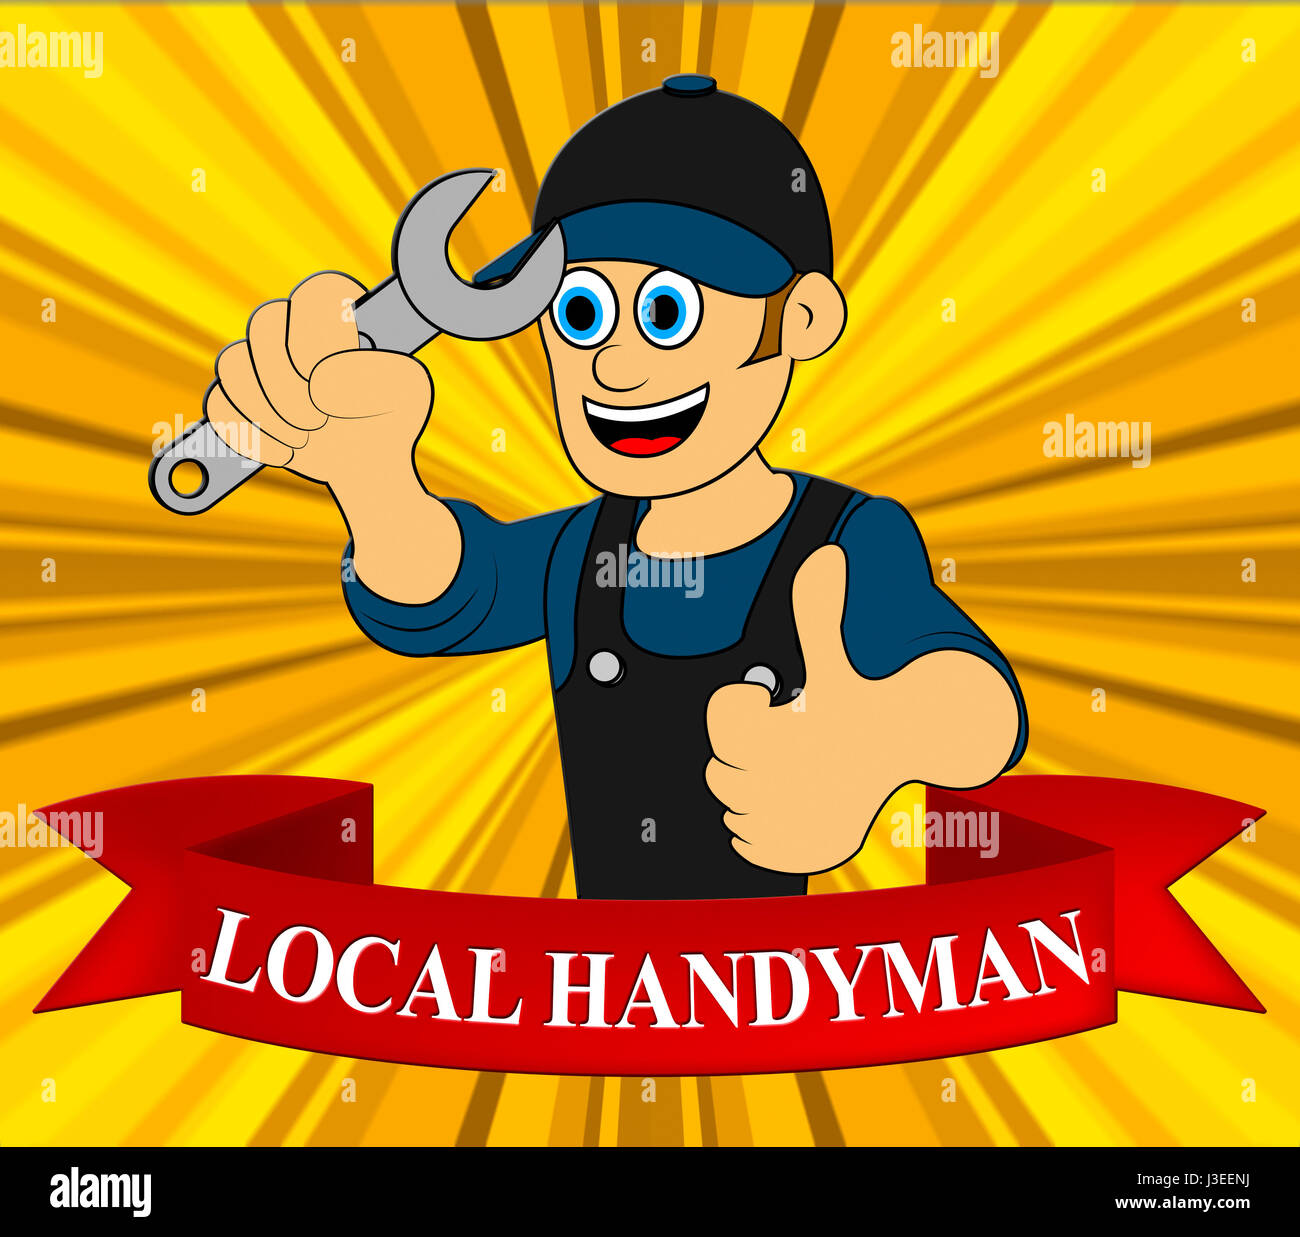 Local Handyman Meaning Neighborhood Builder 3d Illustration Stock Photo